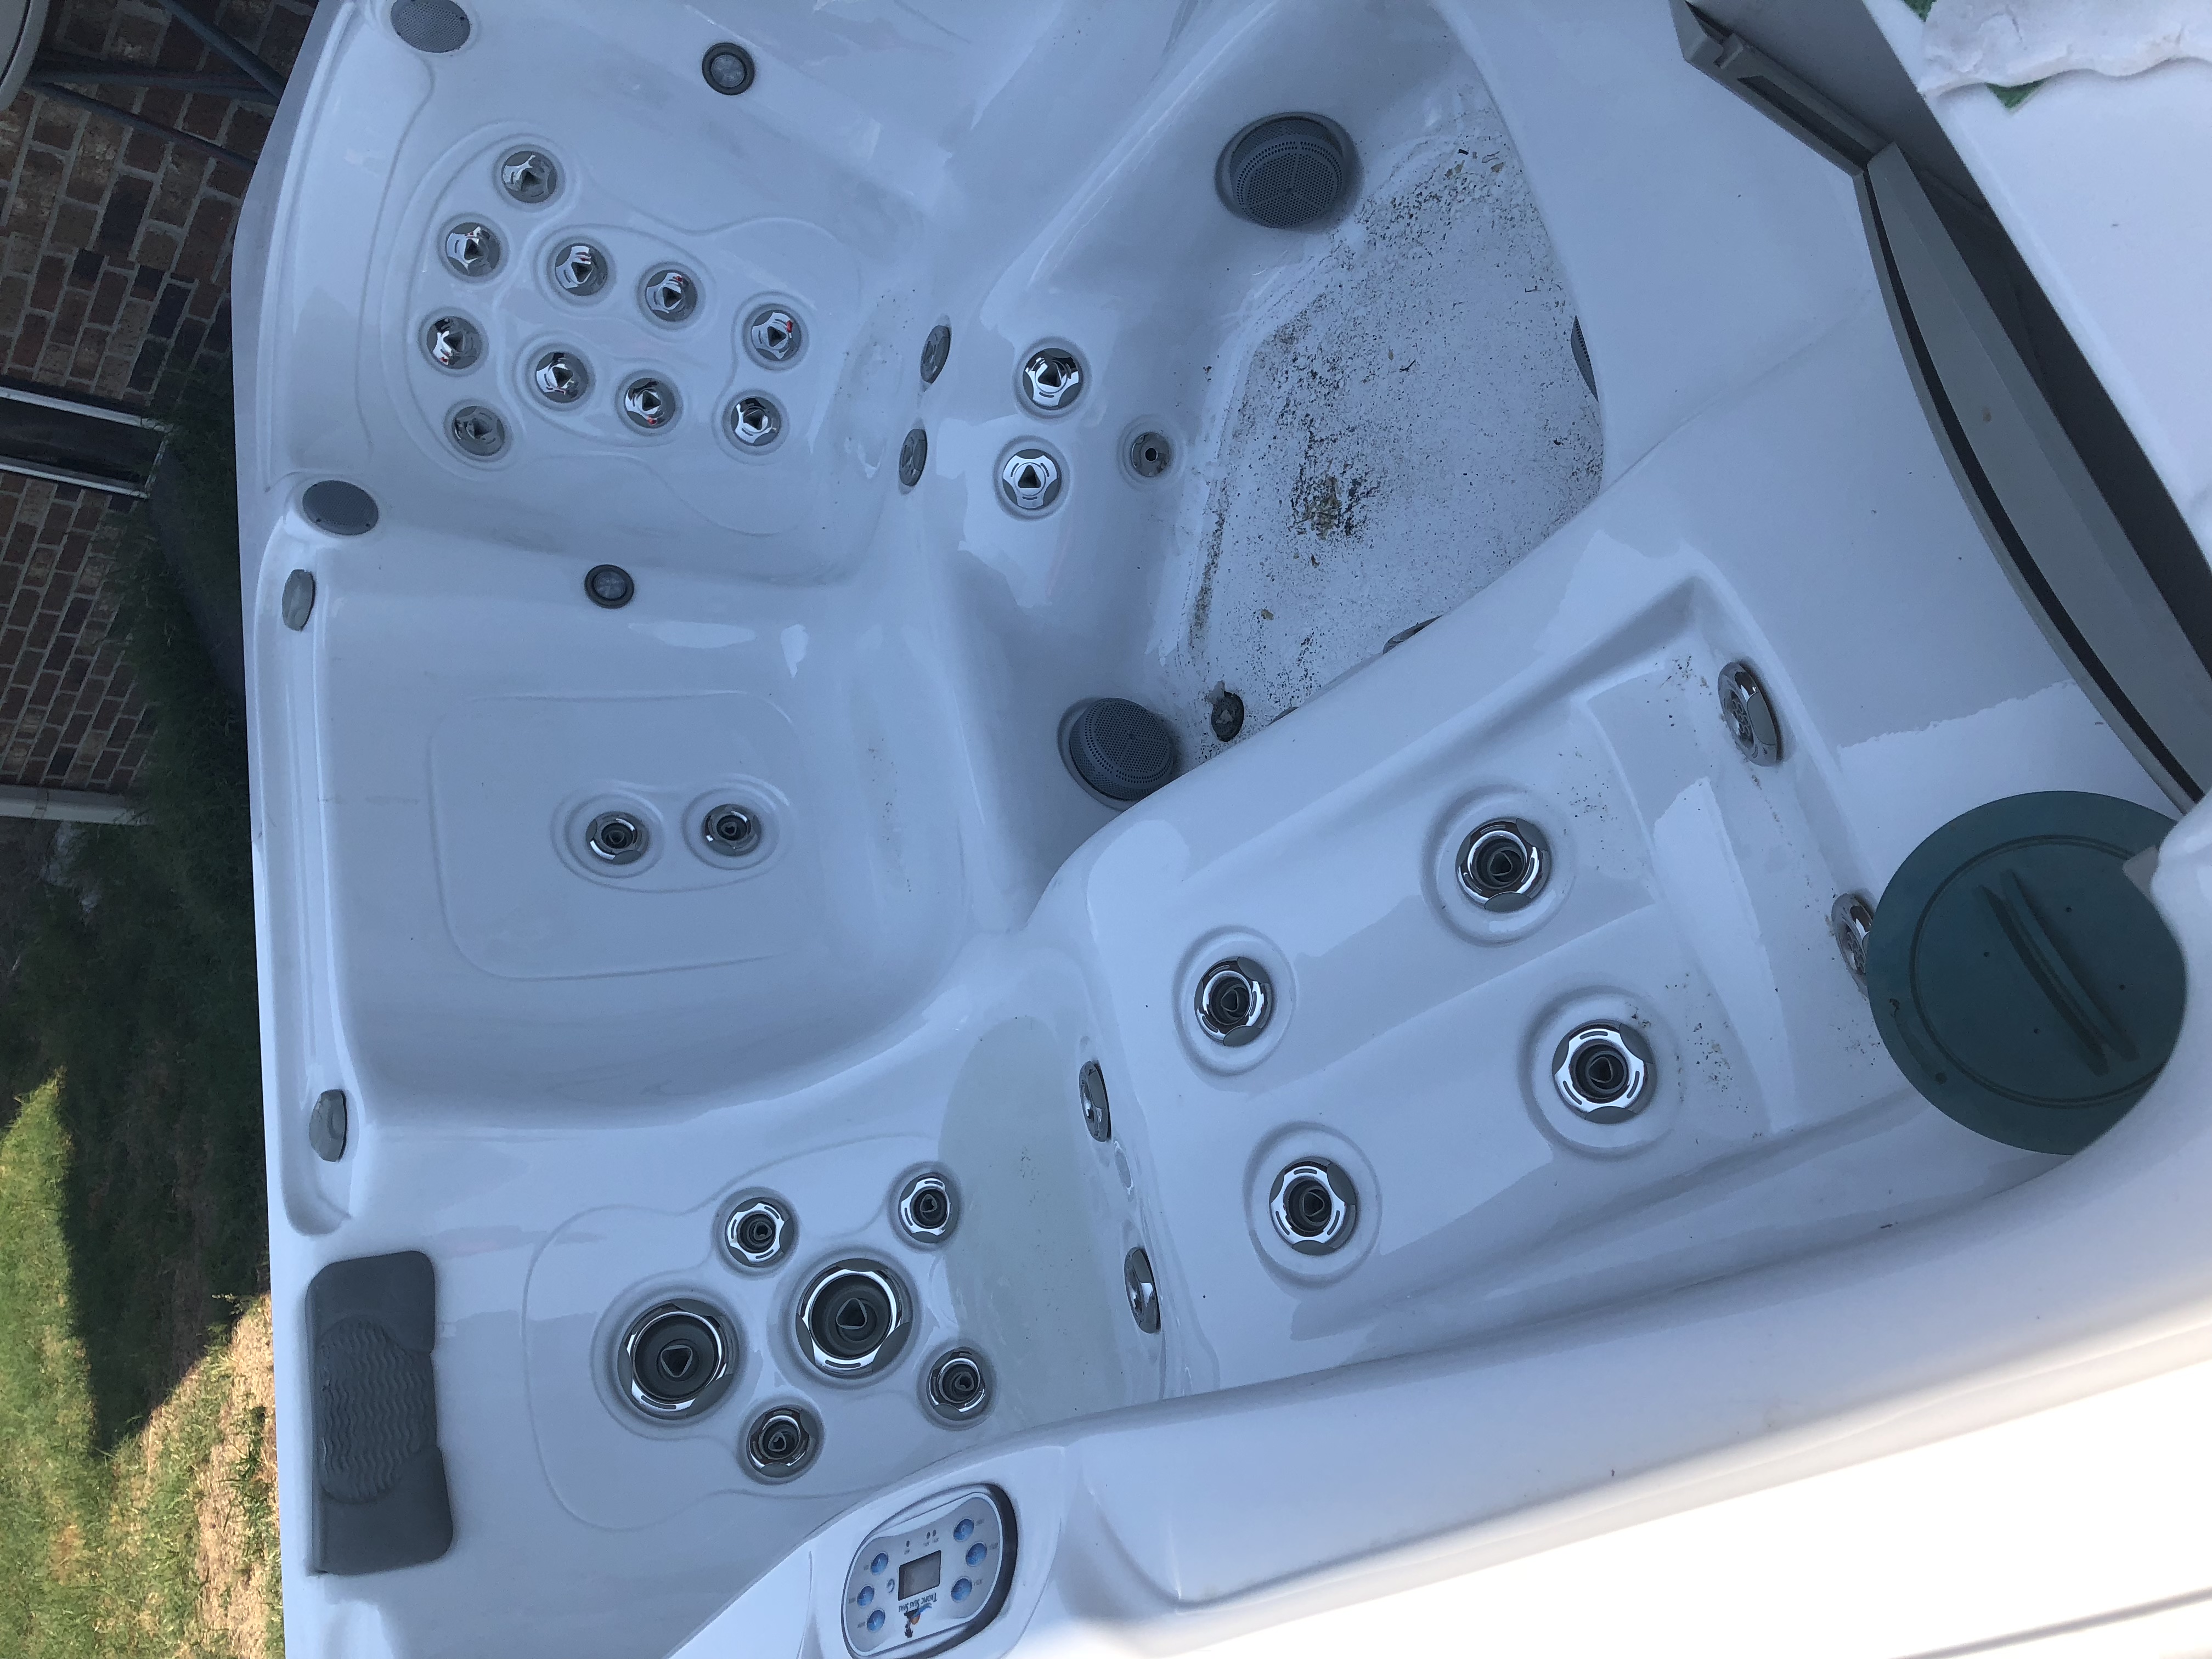 How To Fix A Hot Tub Jet Leak Best Home Design Ideas